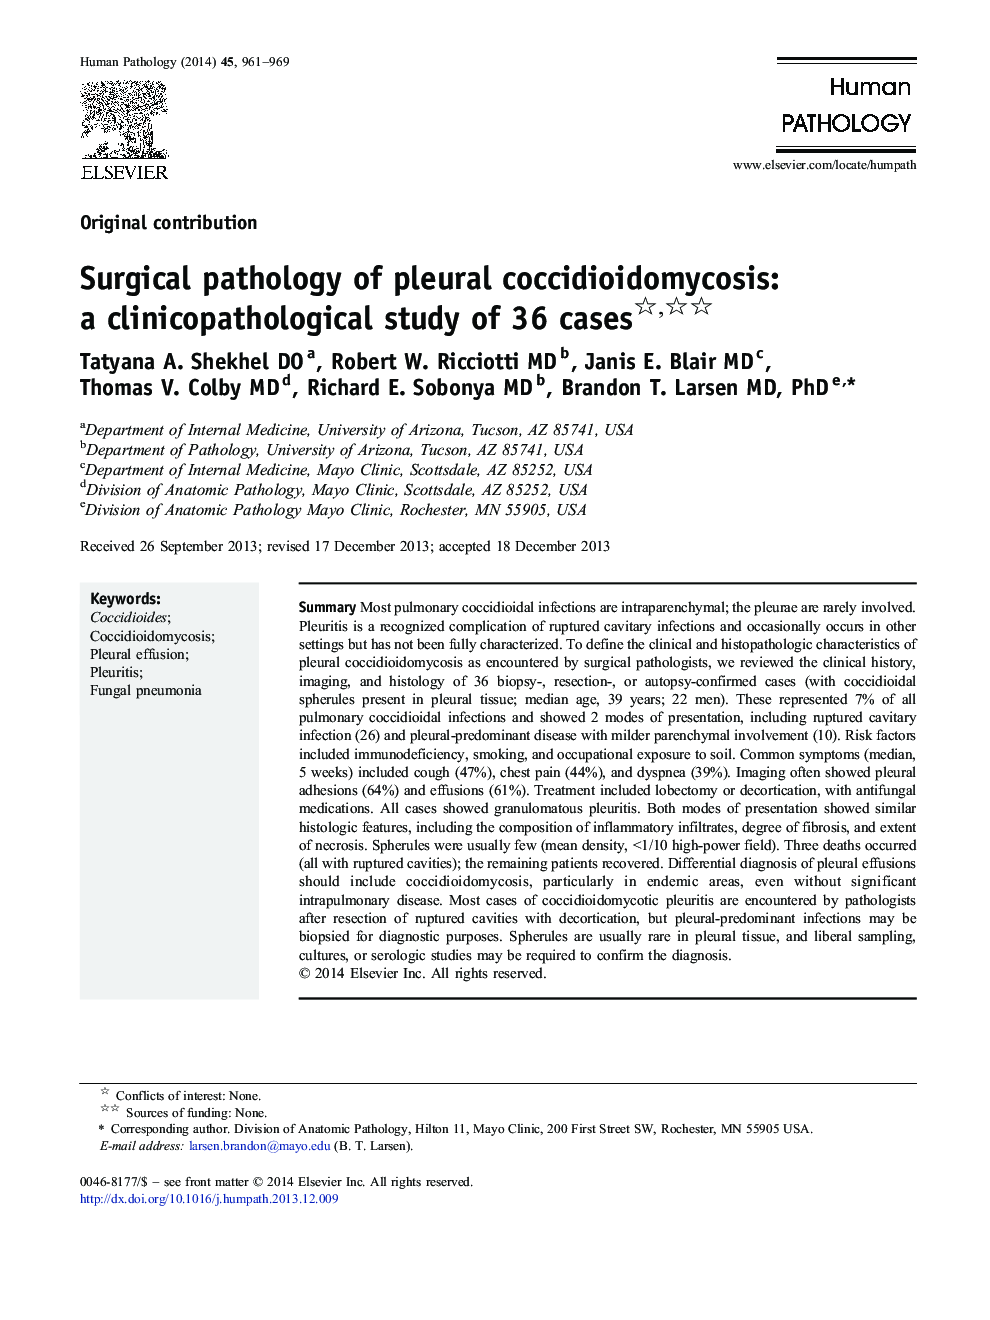 Surgical pathology of pleural coccidioidomycosis: a clinicopathological study of 36 cases